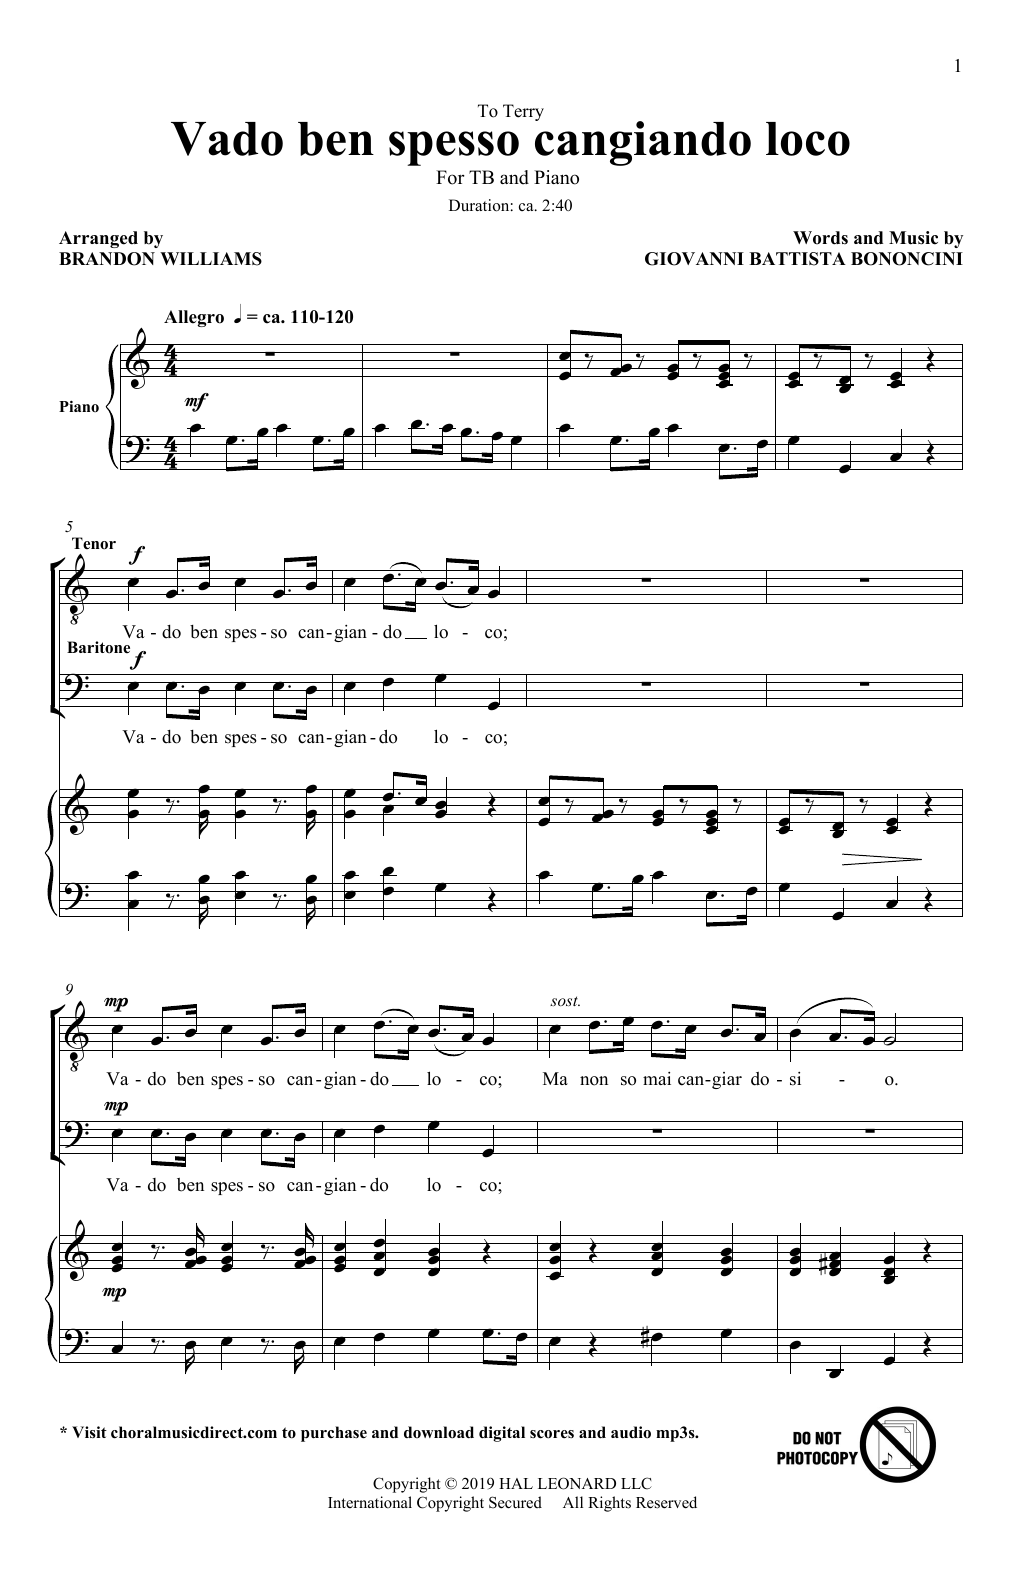 Download Giovanni Battista Bononcini Vado Ben Spesso Cangiando Loco (arr. Brandon Williams) Sheet Music and learn how to play TB Choir PDF digital score in minutes